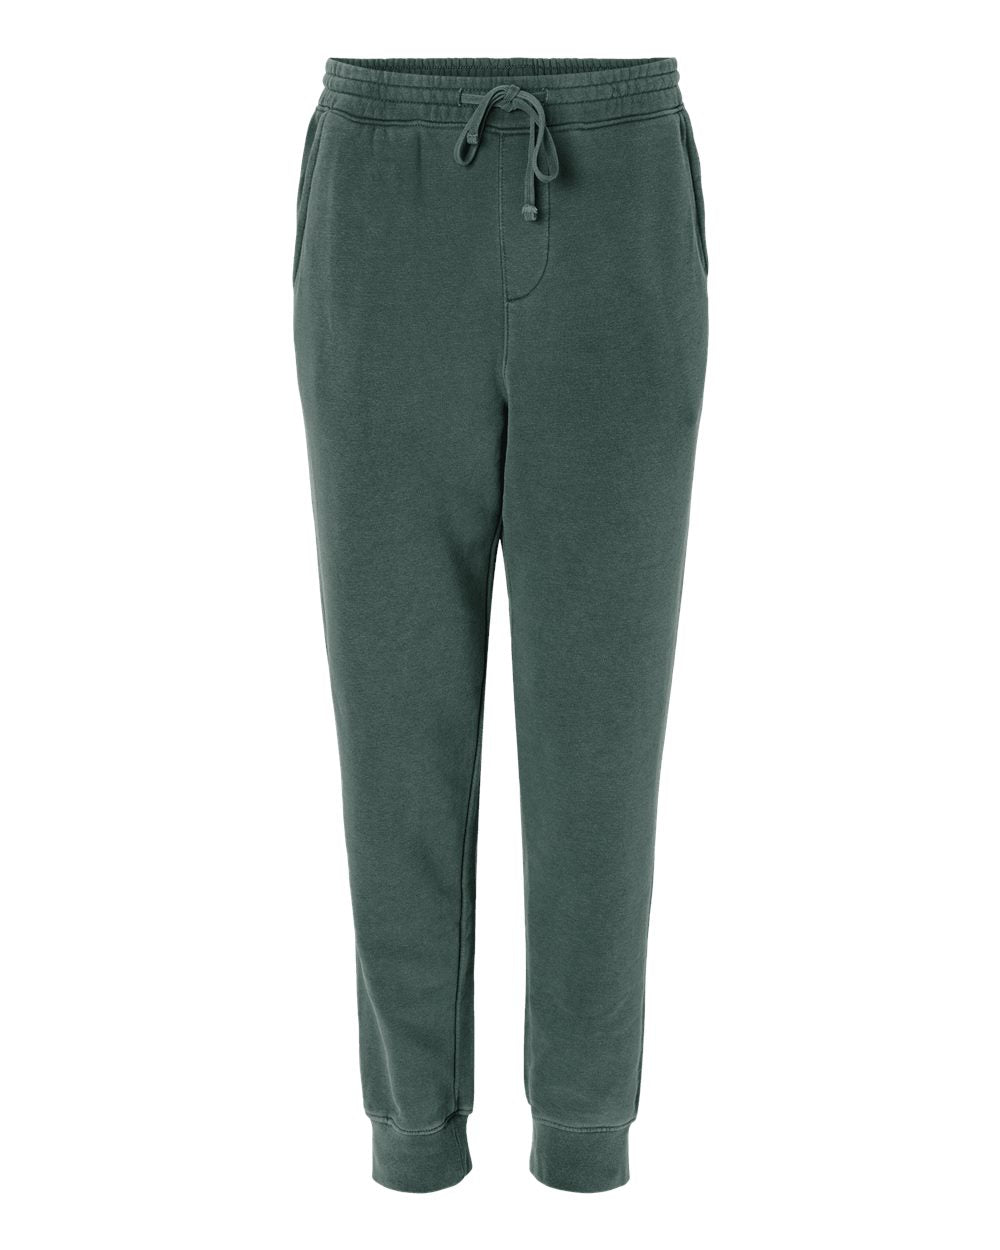 Independent Trading Co. Pigment-Dyed Fleece Pants PRM50PTPD #color_Pigment Alpine Green